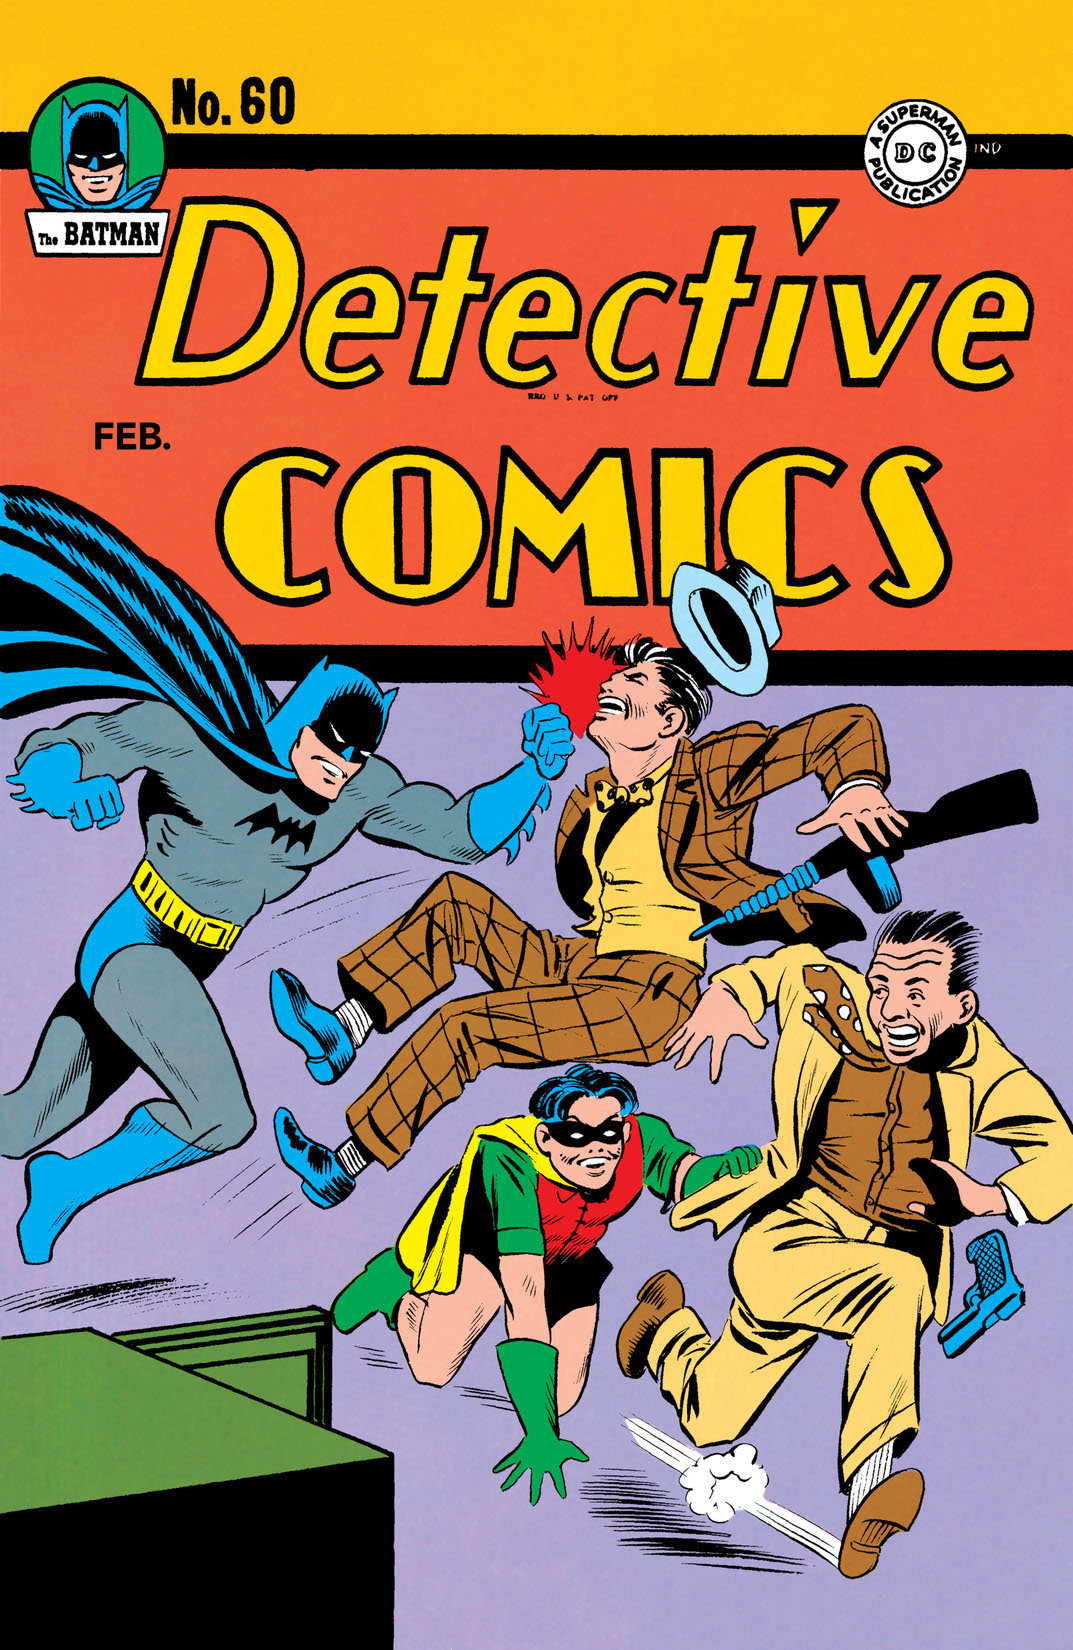 Detective Comics (1937-) #60 preview images